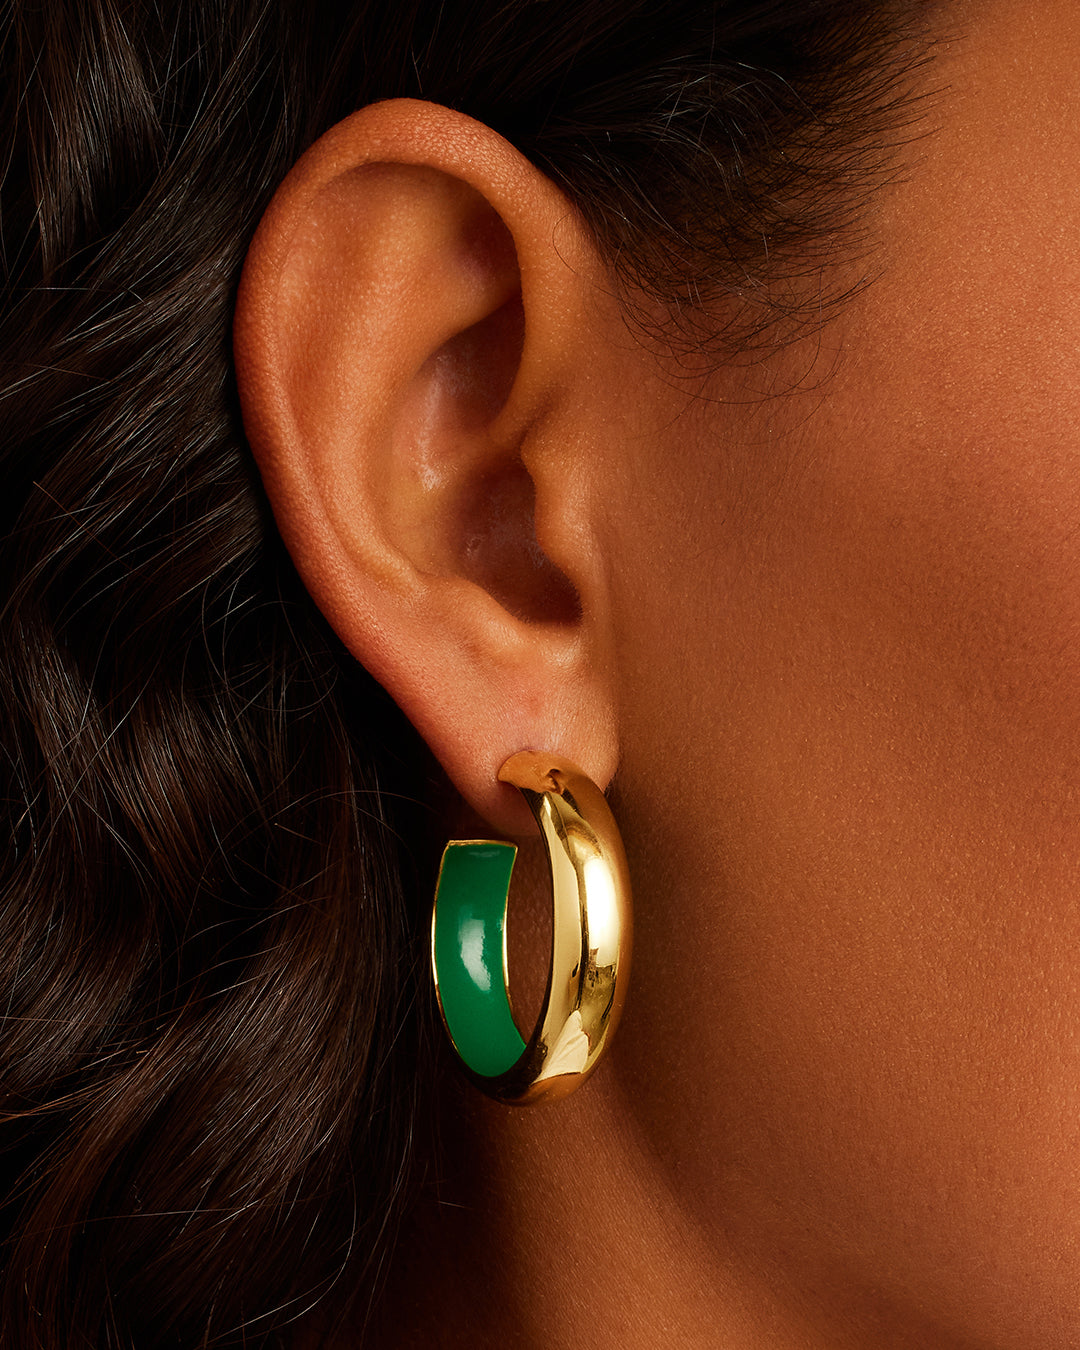 Buy Green Hoops Earrings at Amazonin